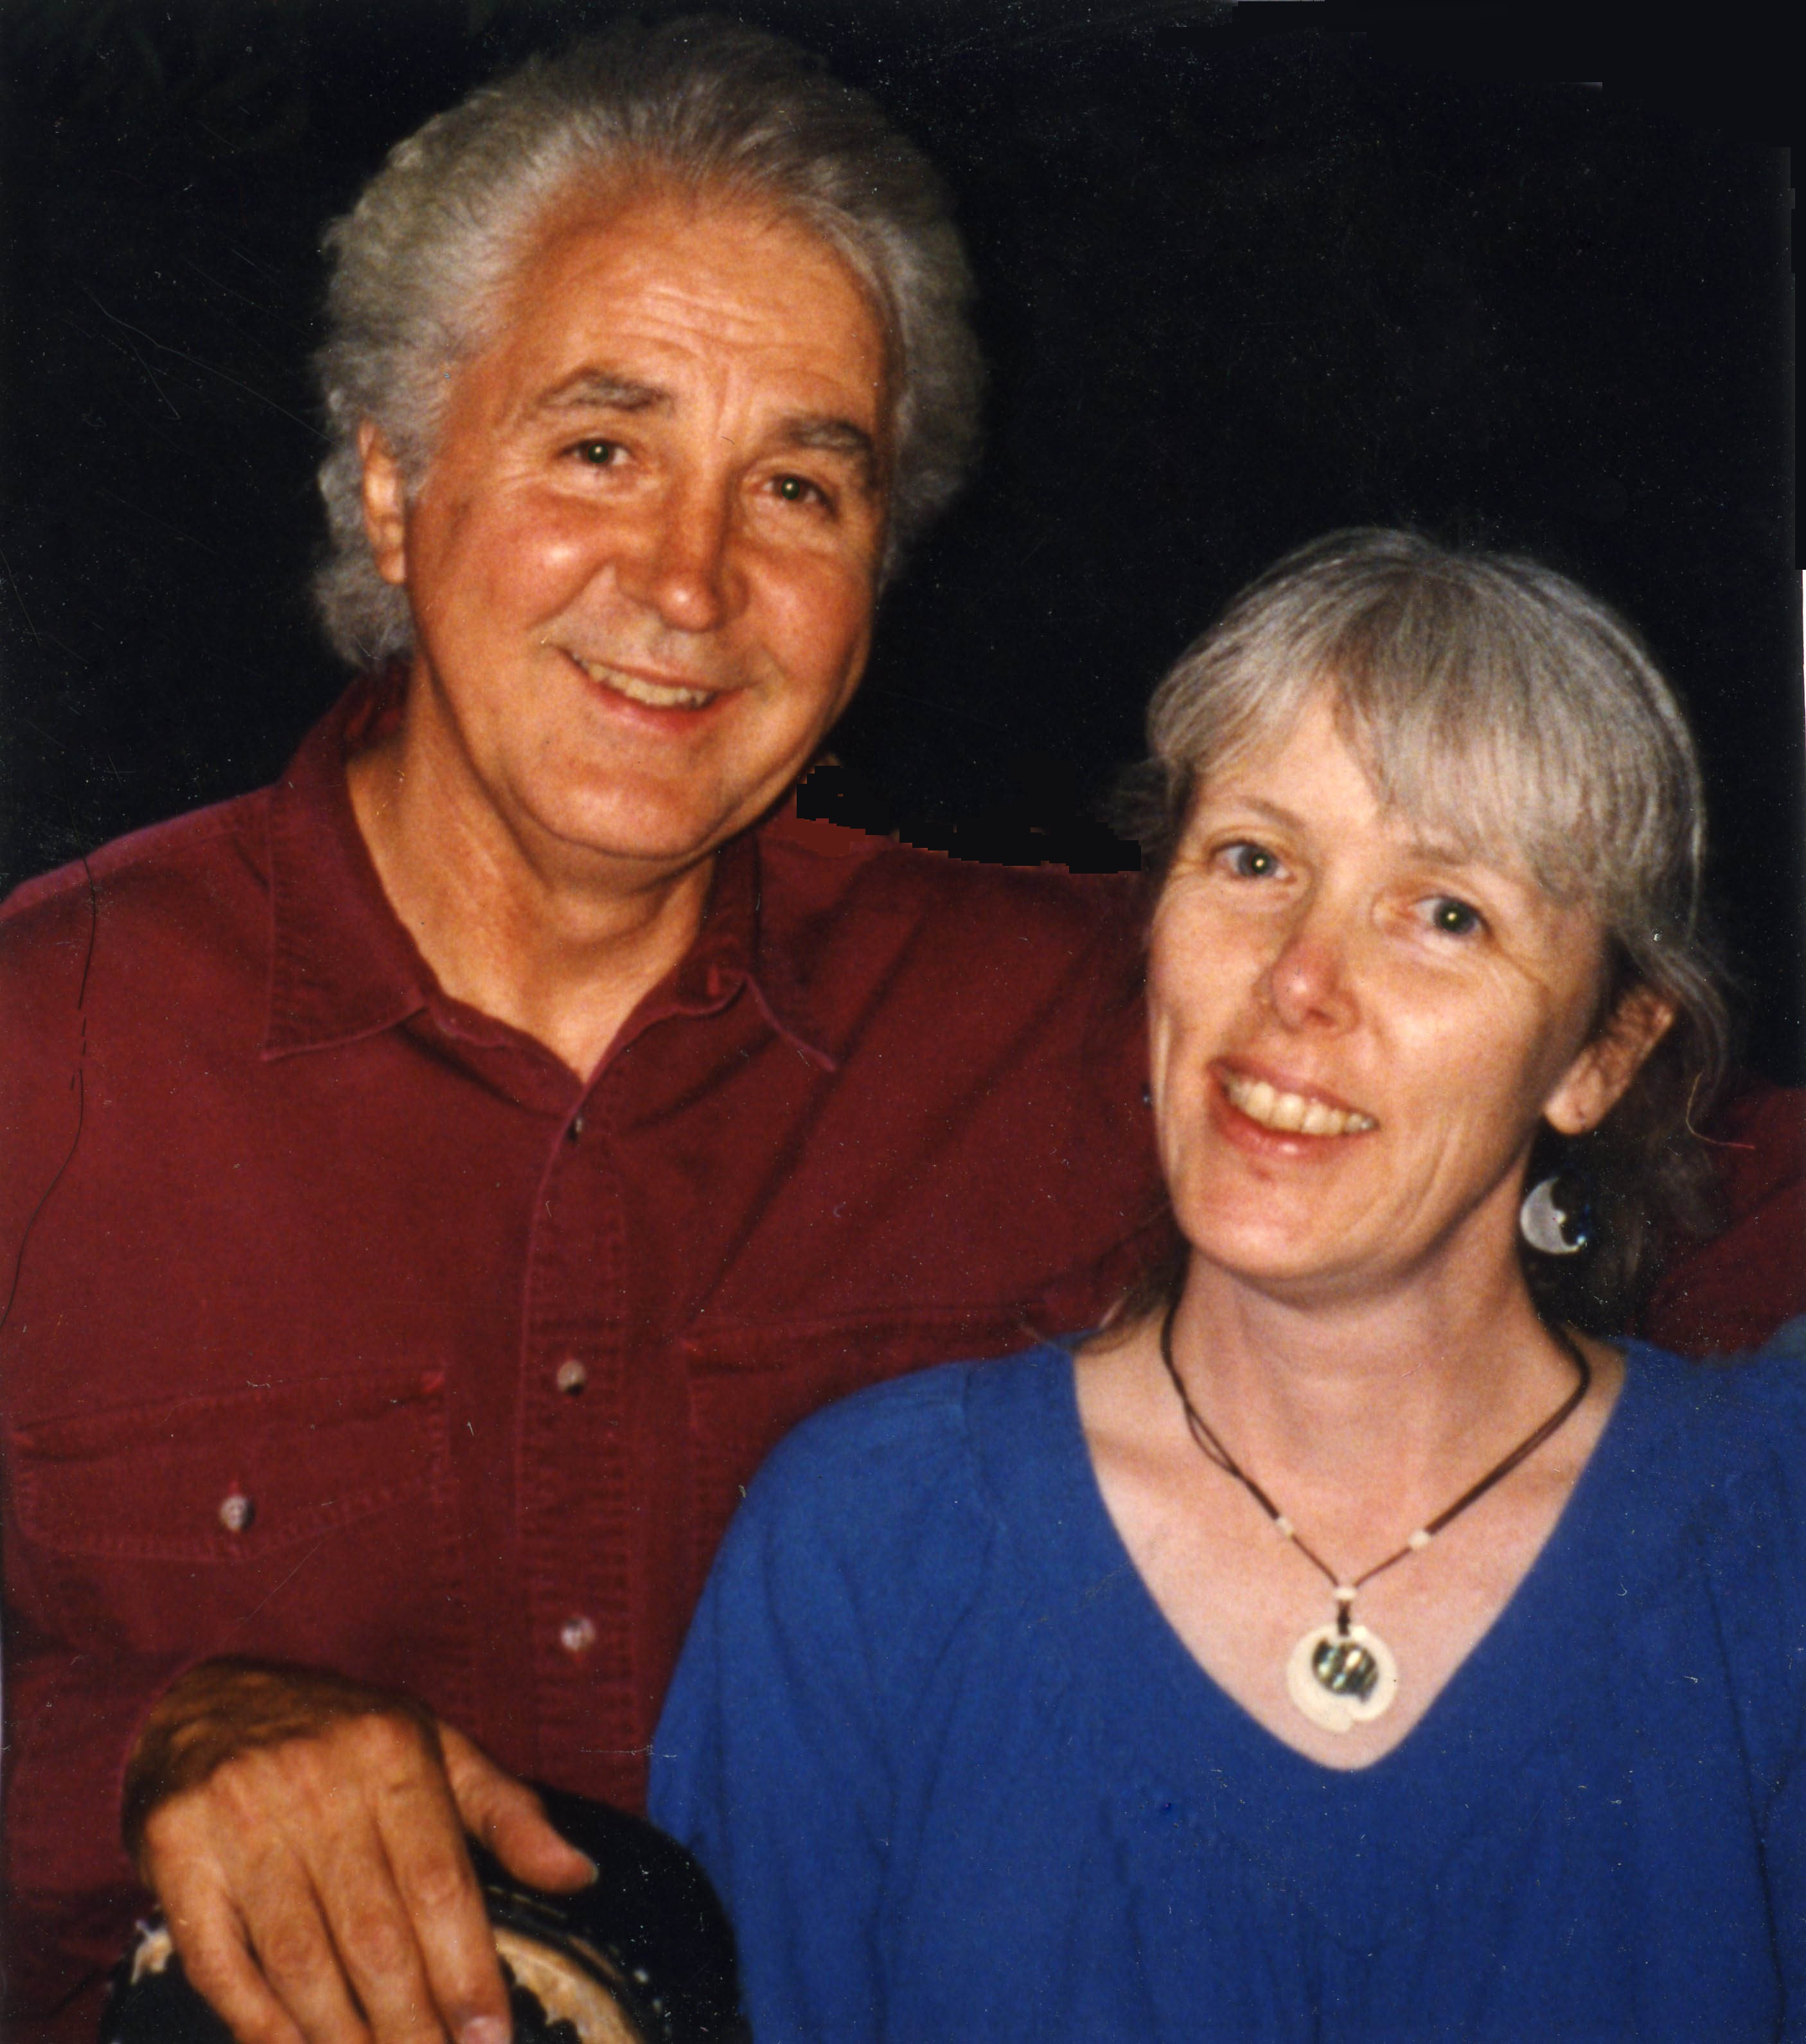 Steve Gillette & Cindy Mangsen